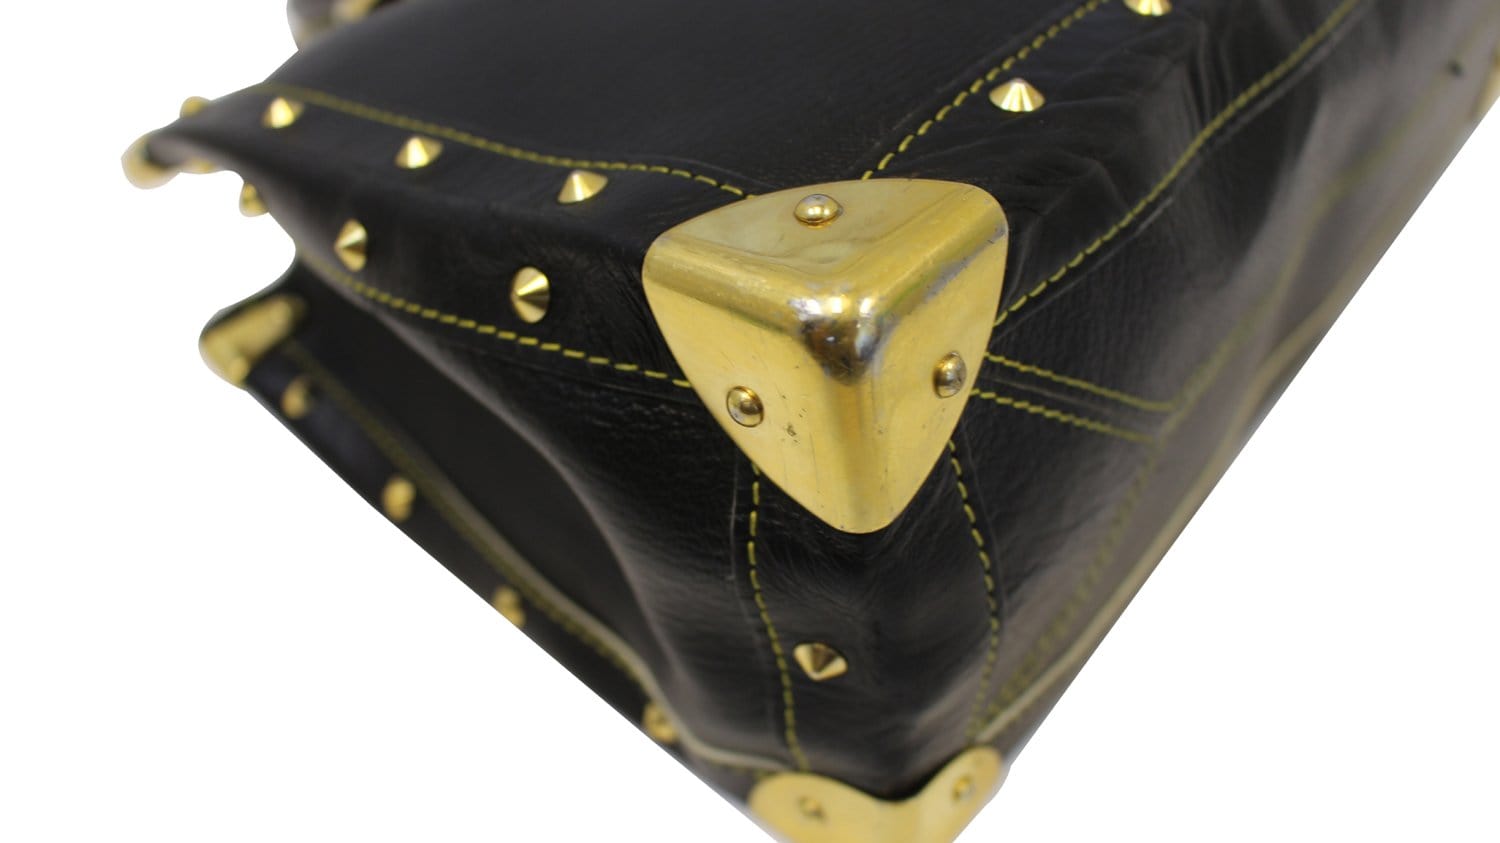 Louis Vuitton Suhali Le Fabuleux Handbag Leather Black [Guaranteed authentic]